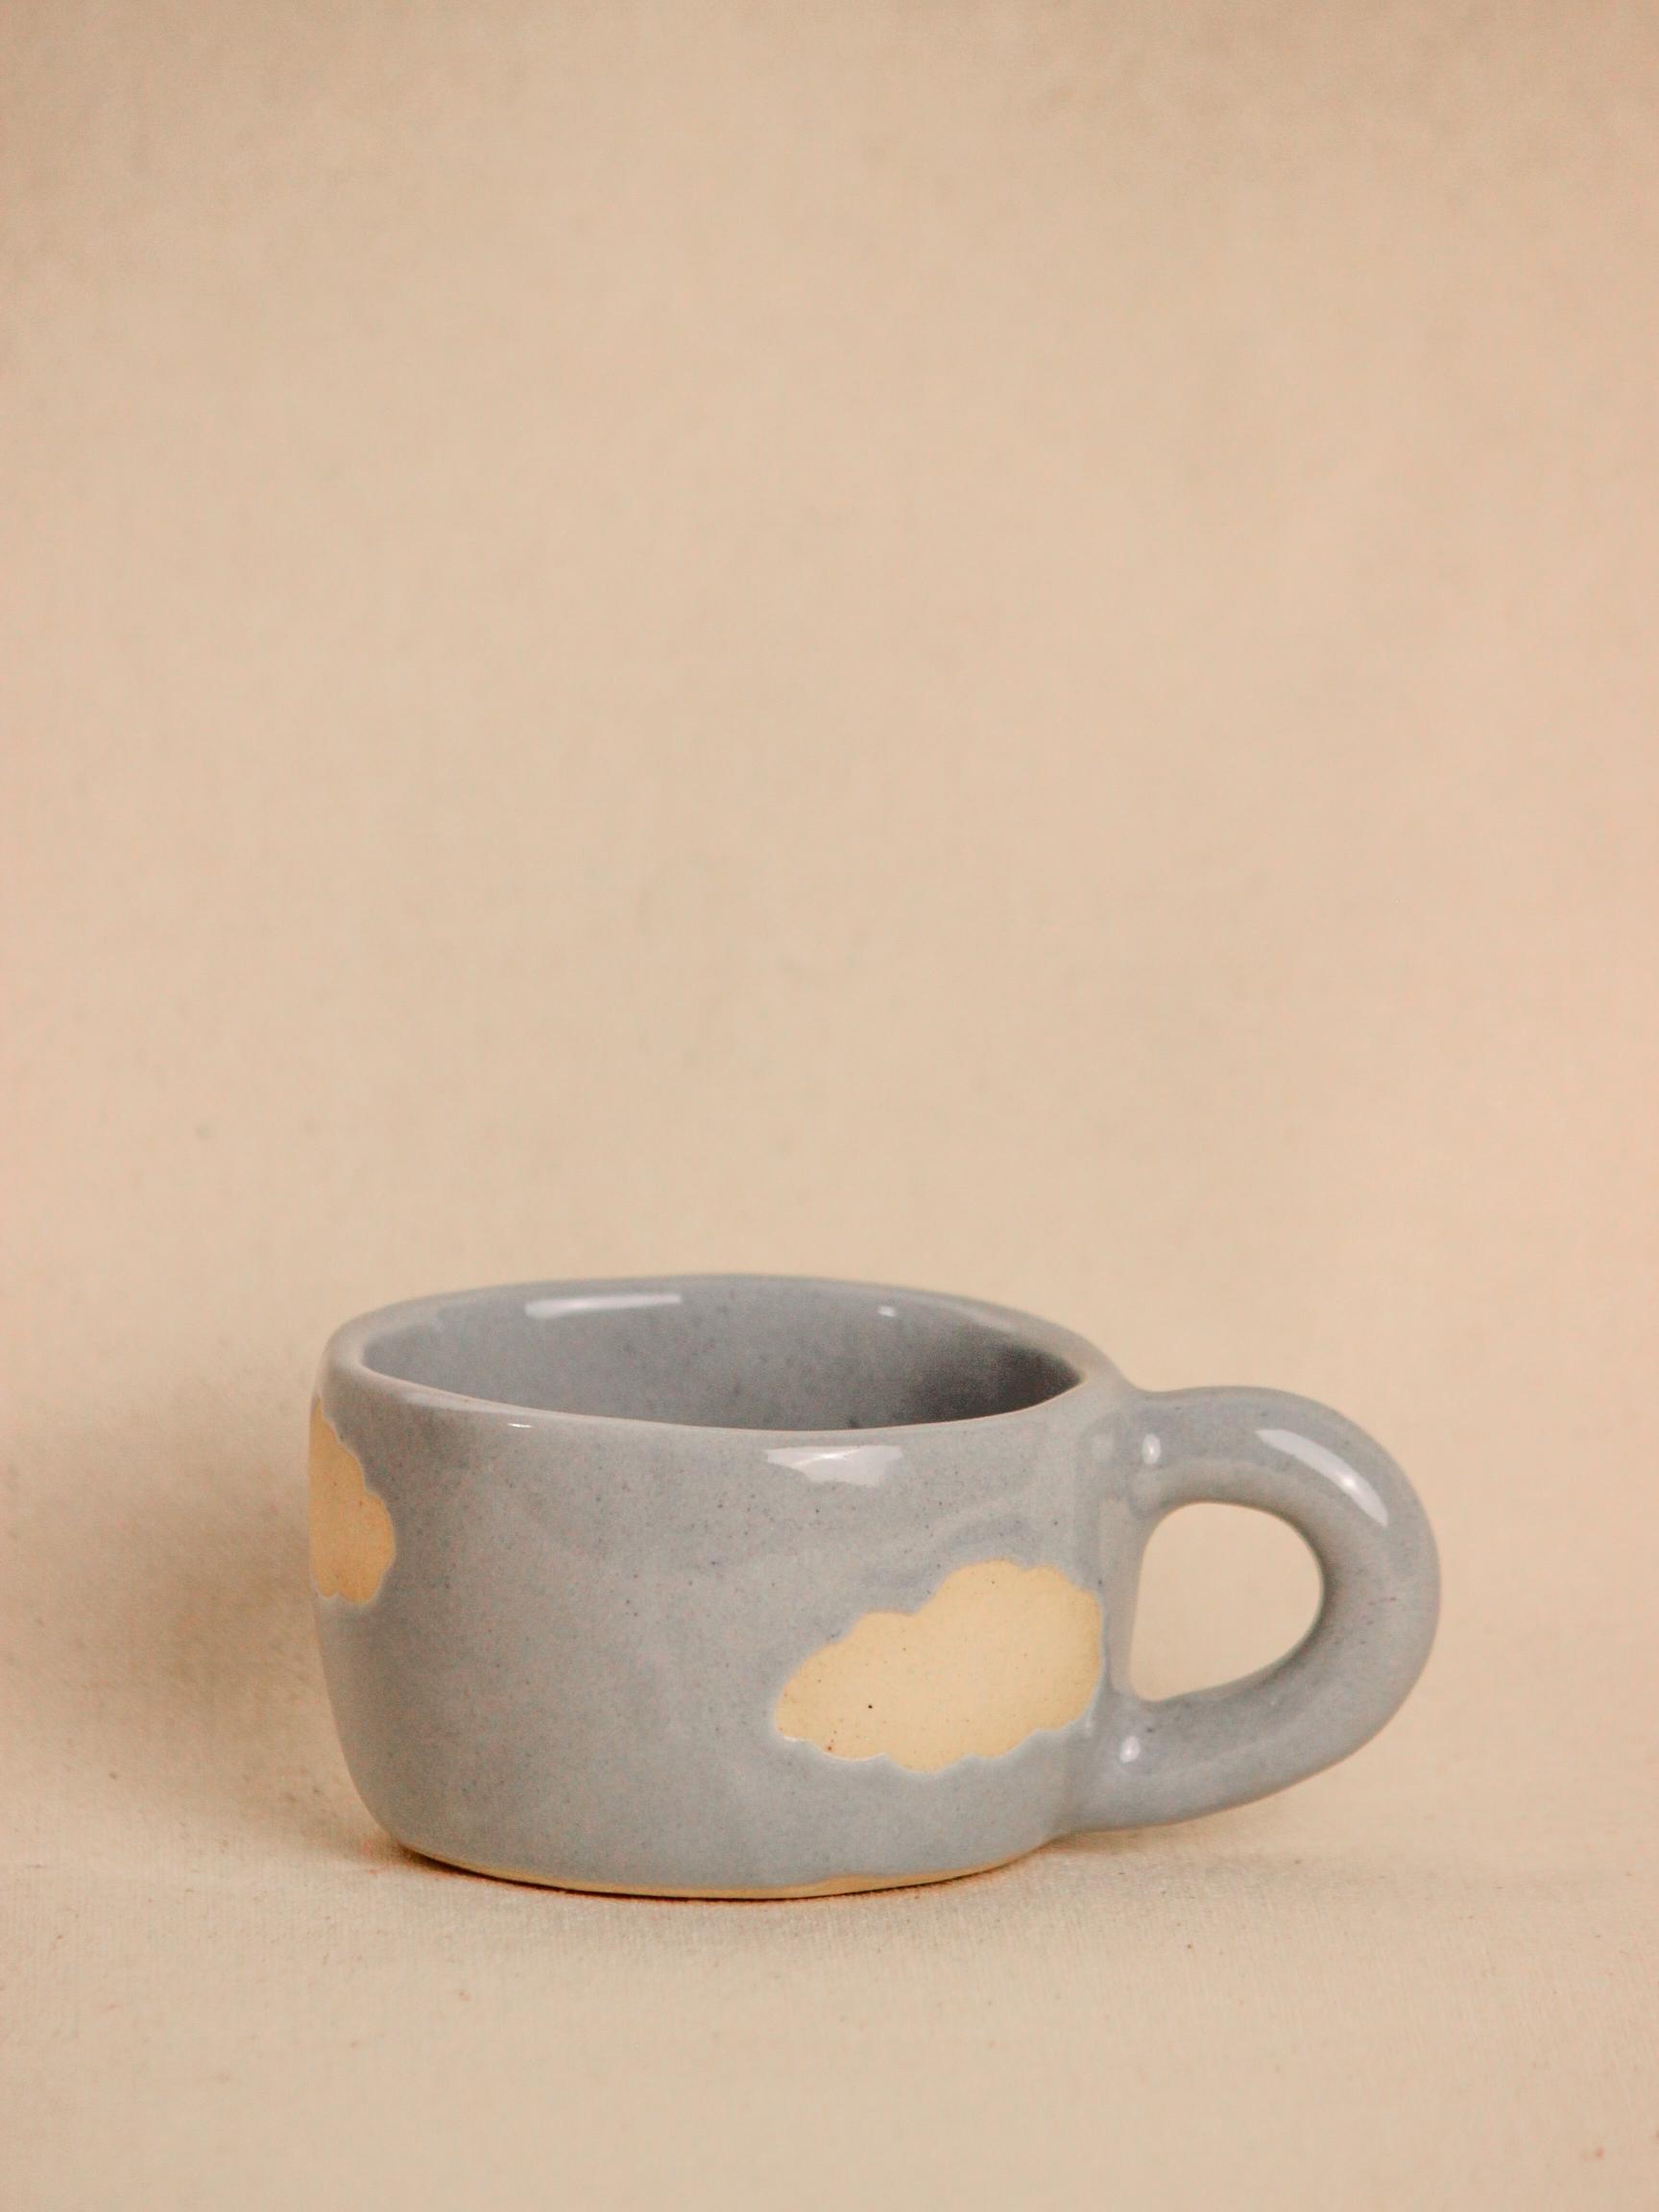 The Orby House Light Blue Cloud Mug, 250 ml, w saucer